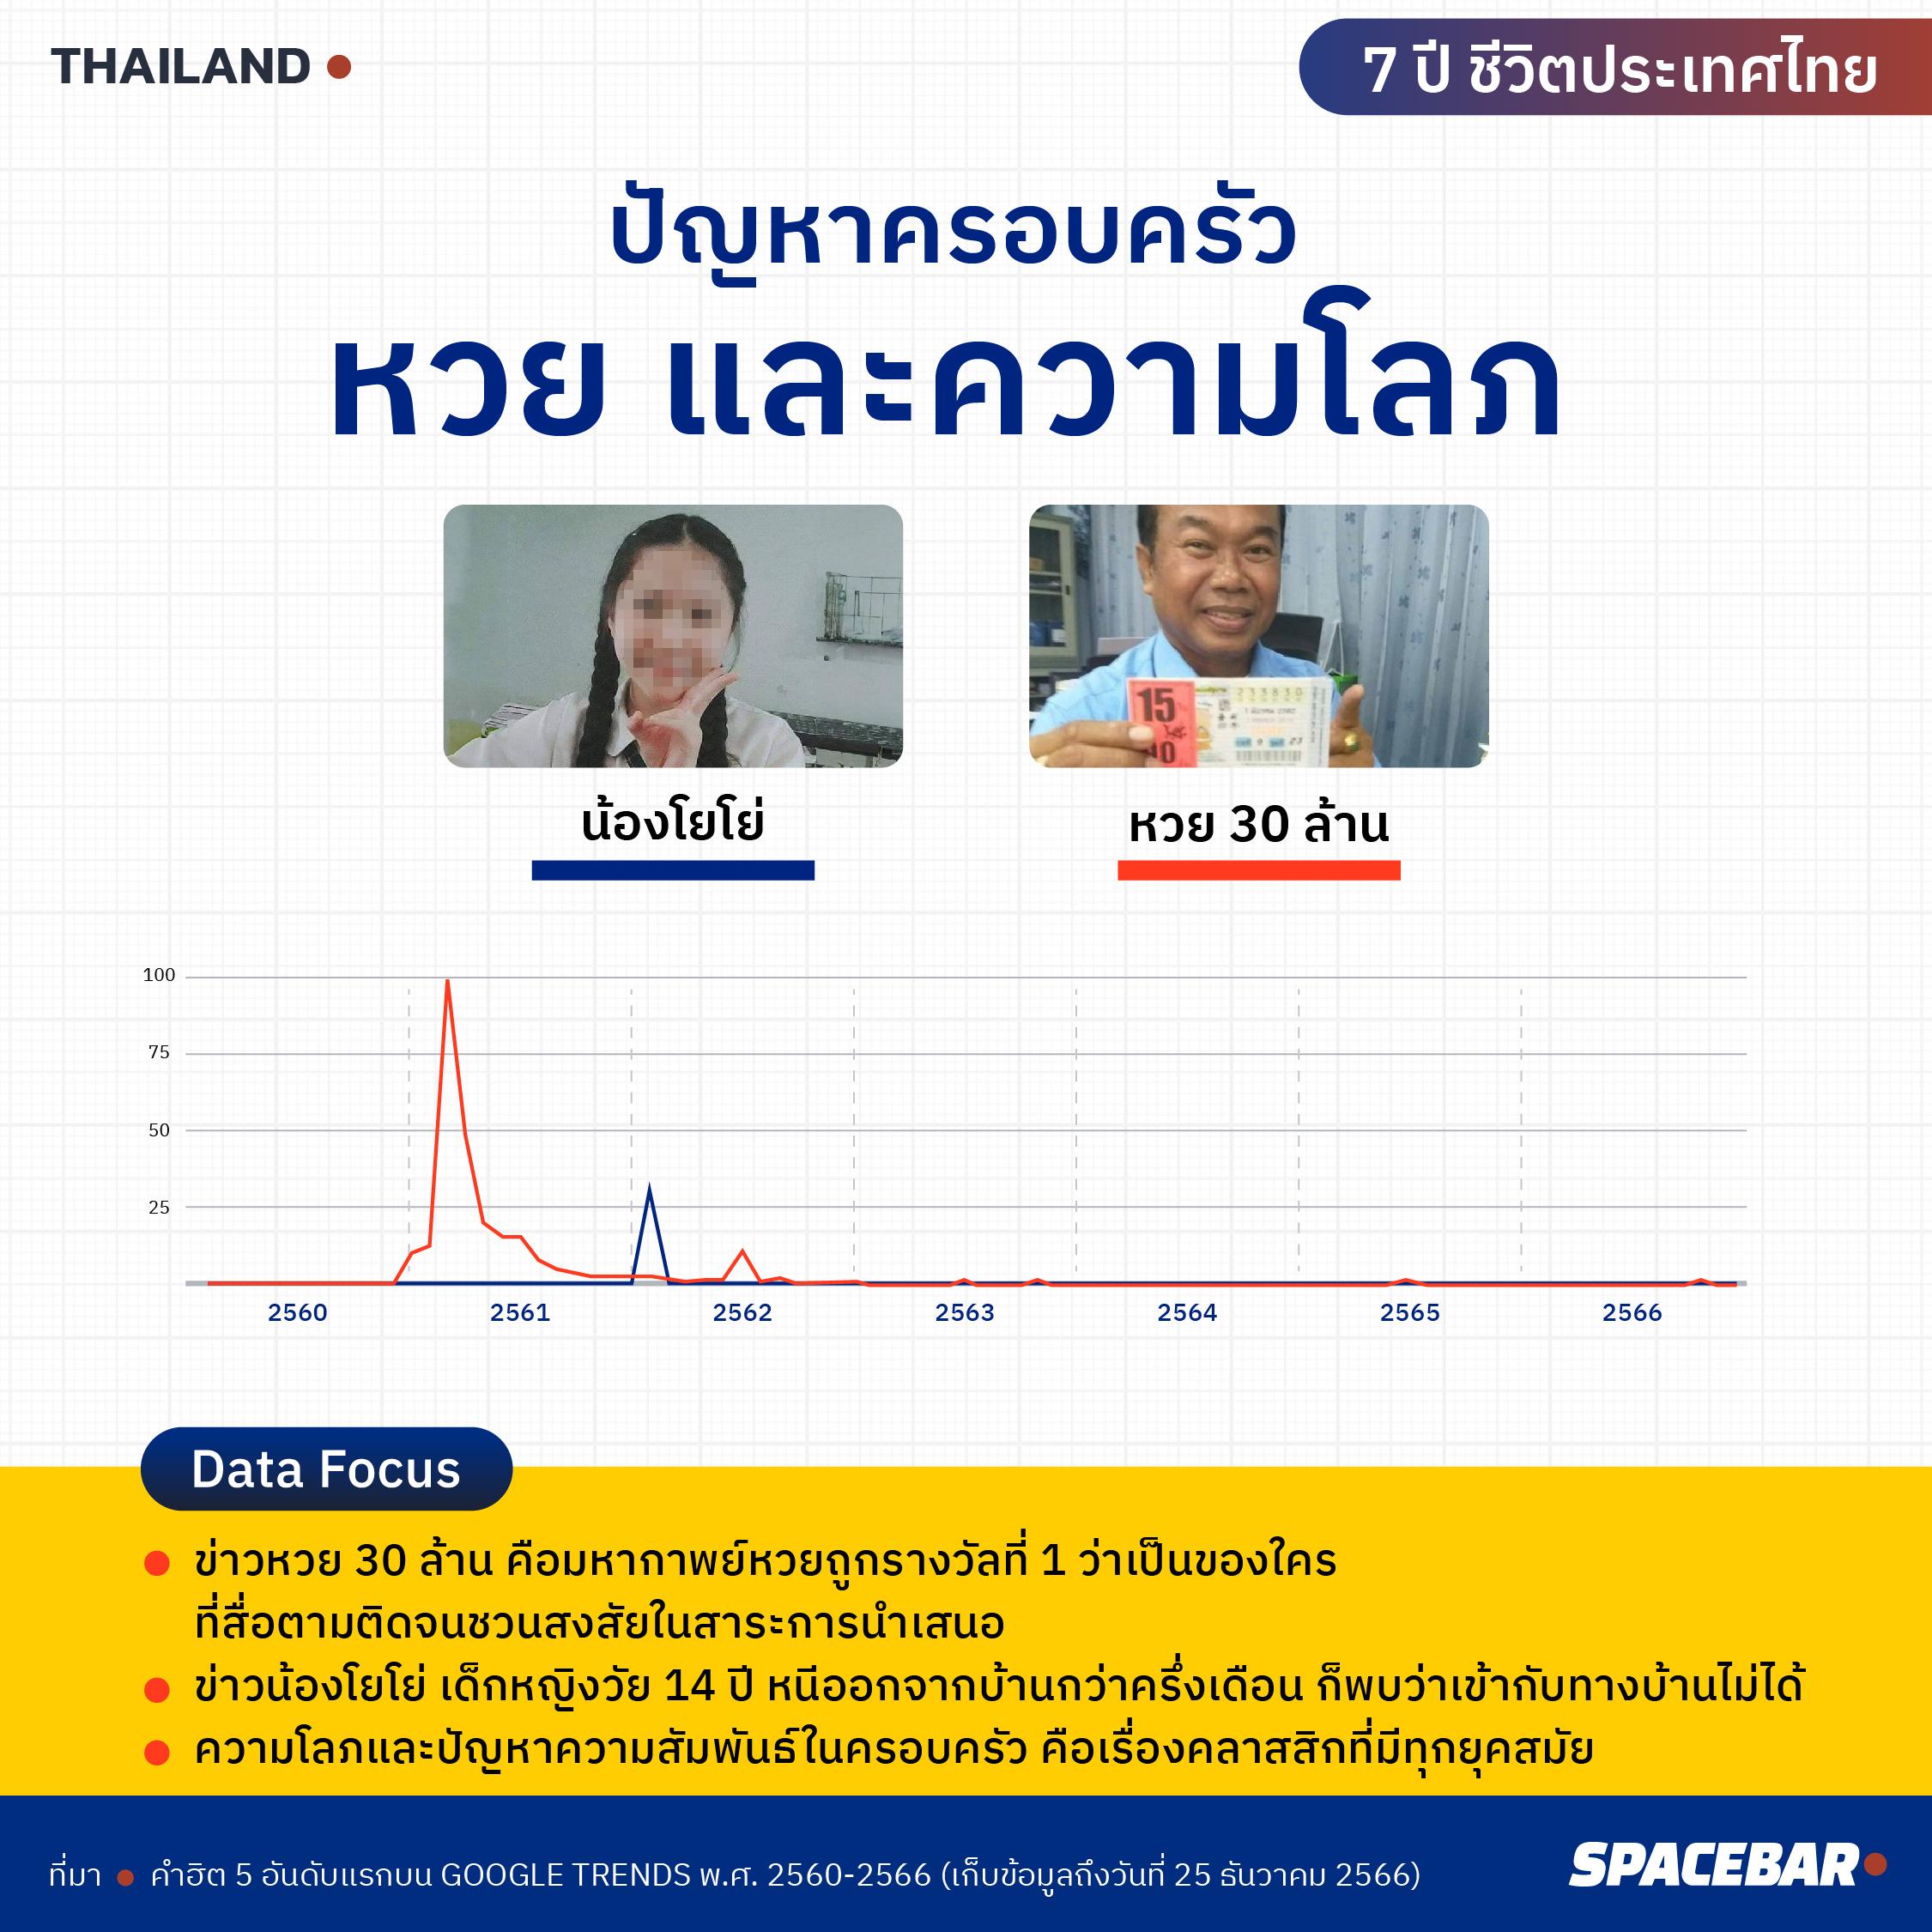 spacebar สเปซบาร์, Google Trends, ประเทศไทย, ปี 2566